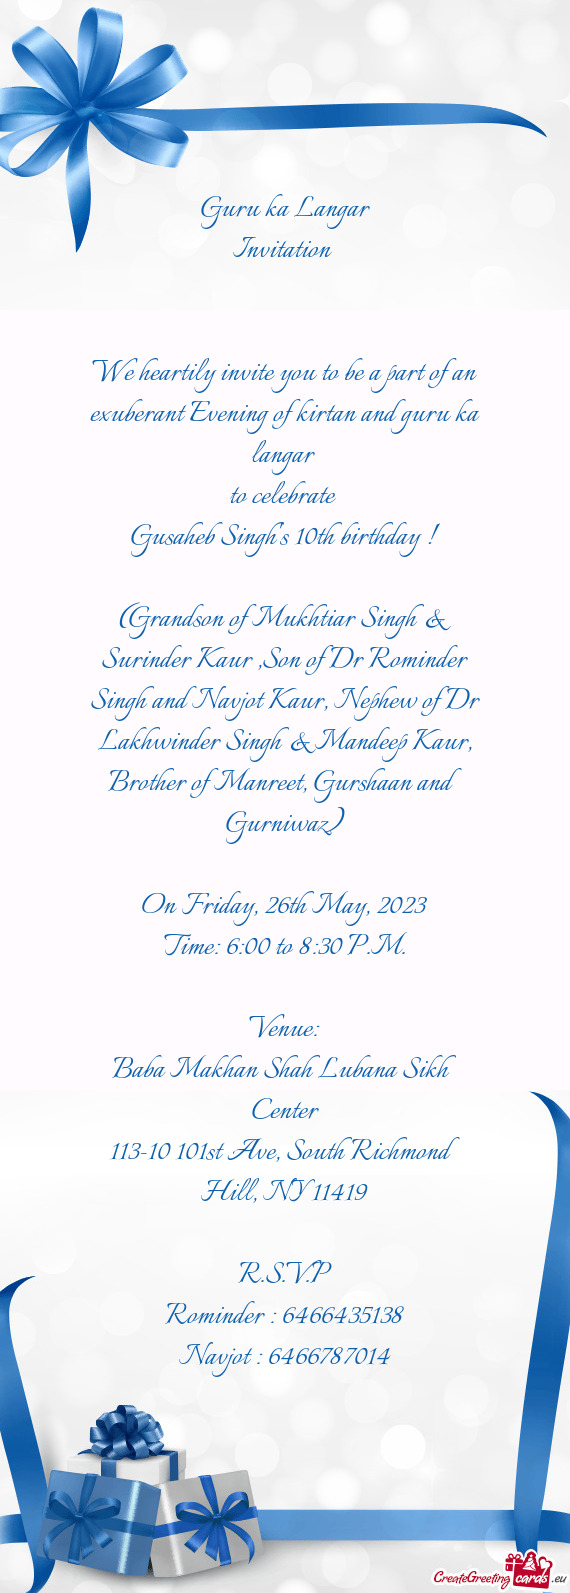 We heartily invite you to be a part of an exuberant Evening of kirtan and guru ka langar